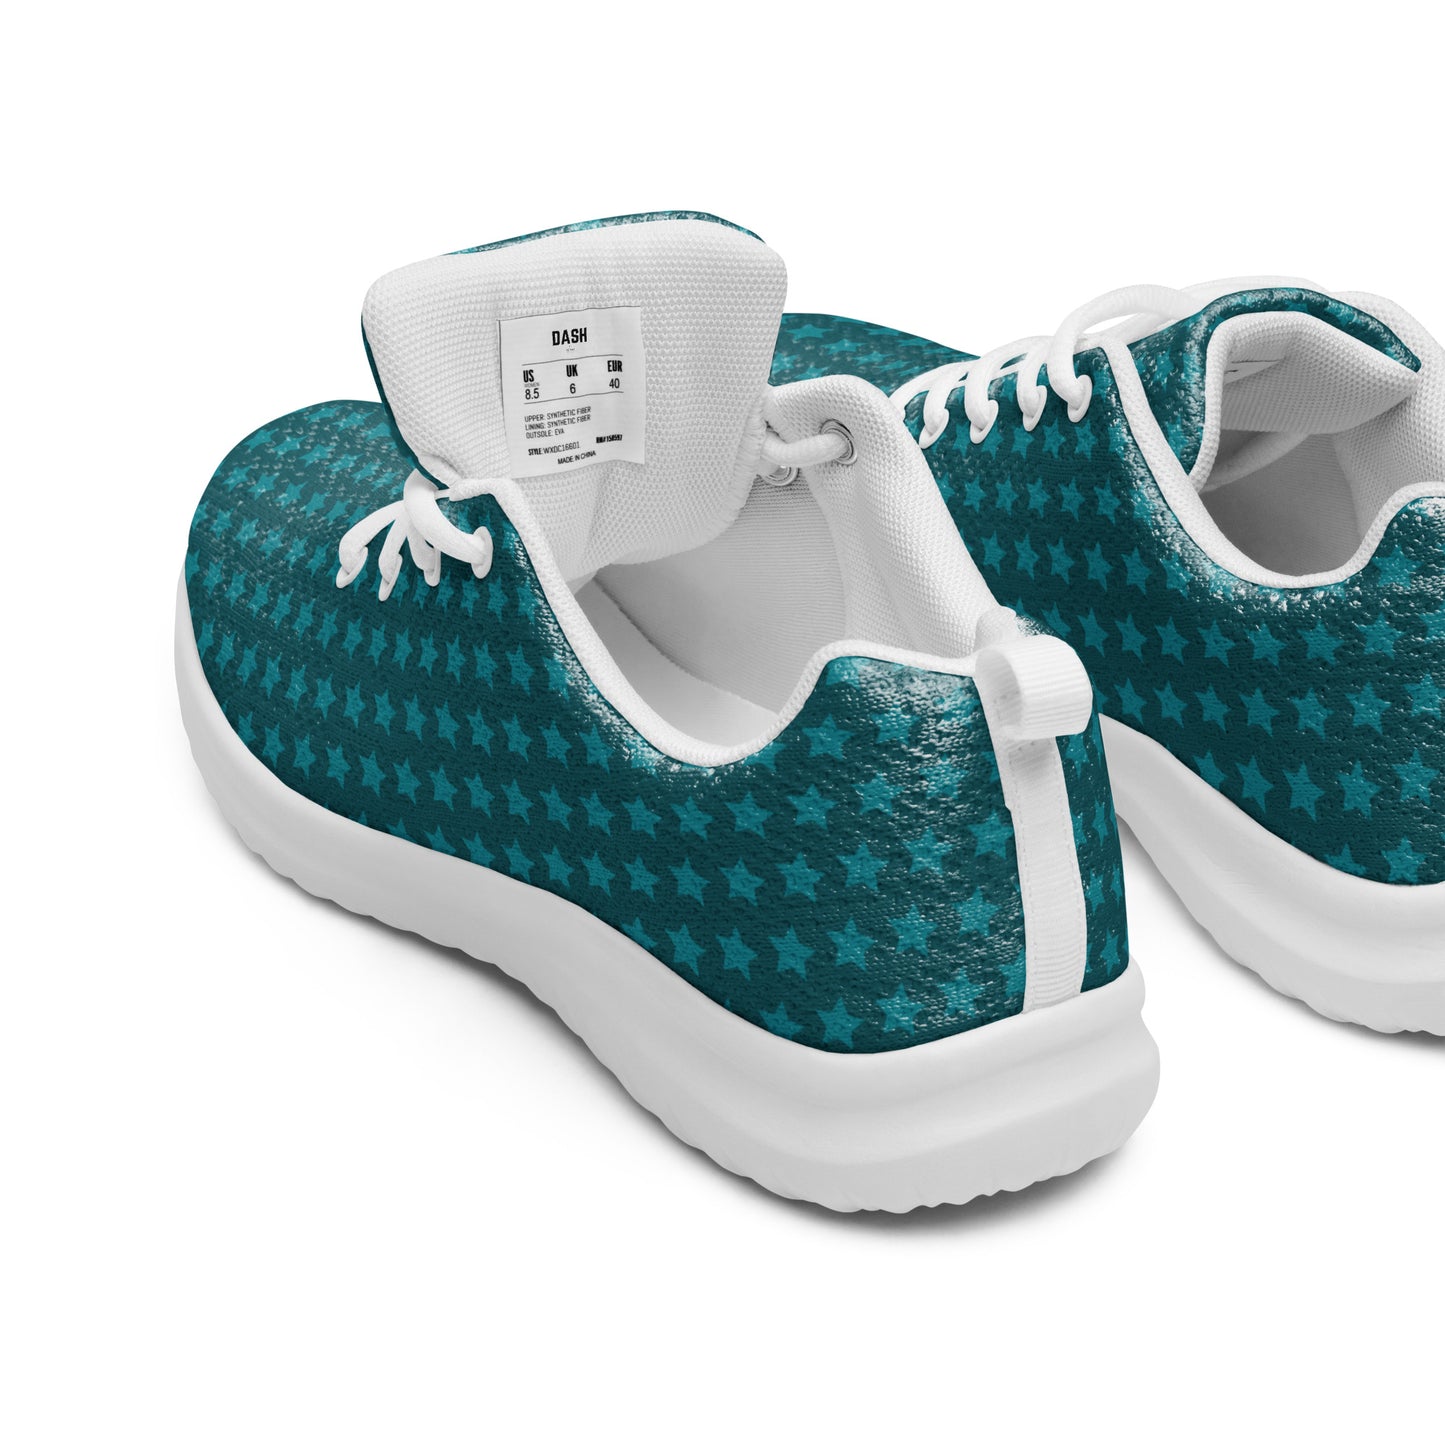 DASH Stars Green Men’s Athletic Shoes Lightweight Breathable Design by IOBI Original Apparel